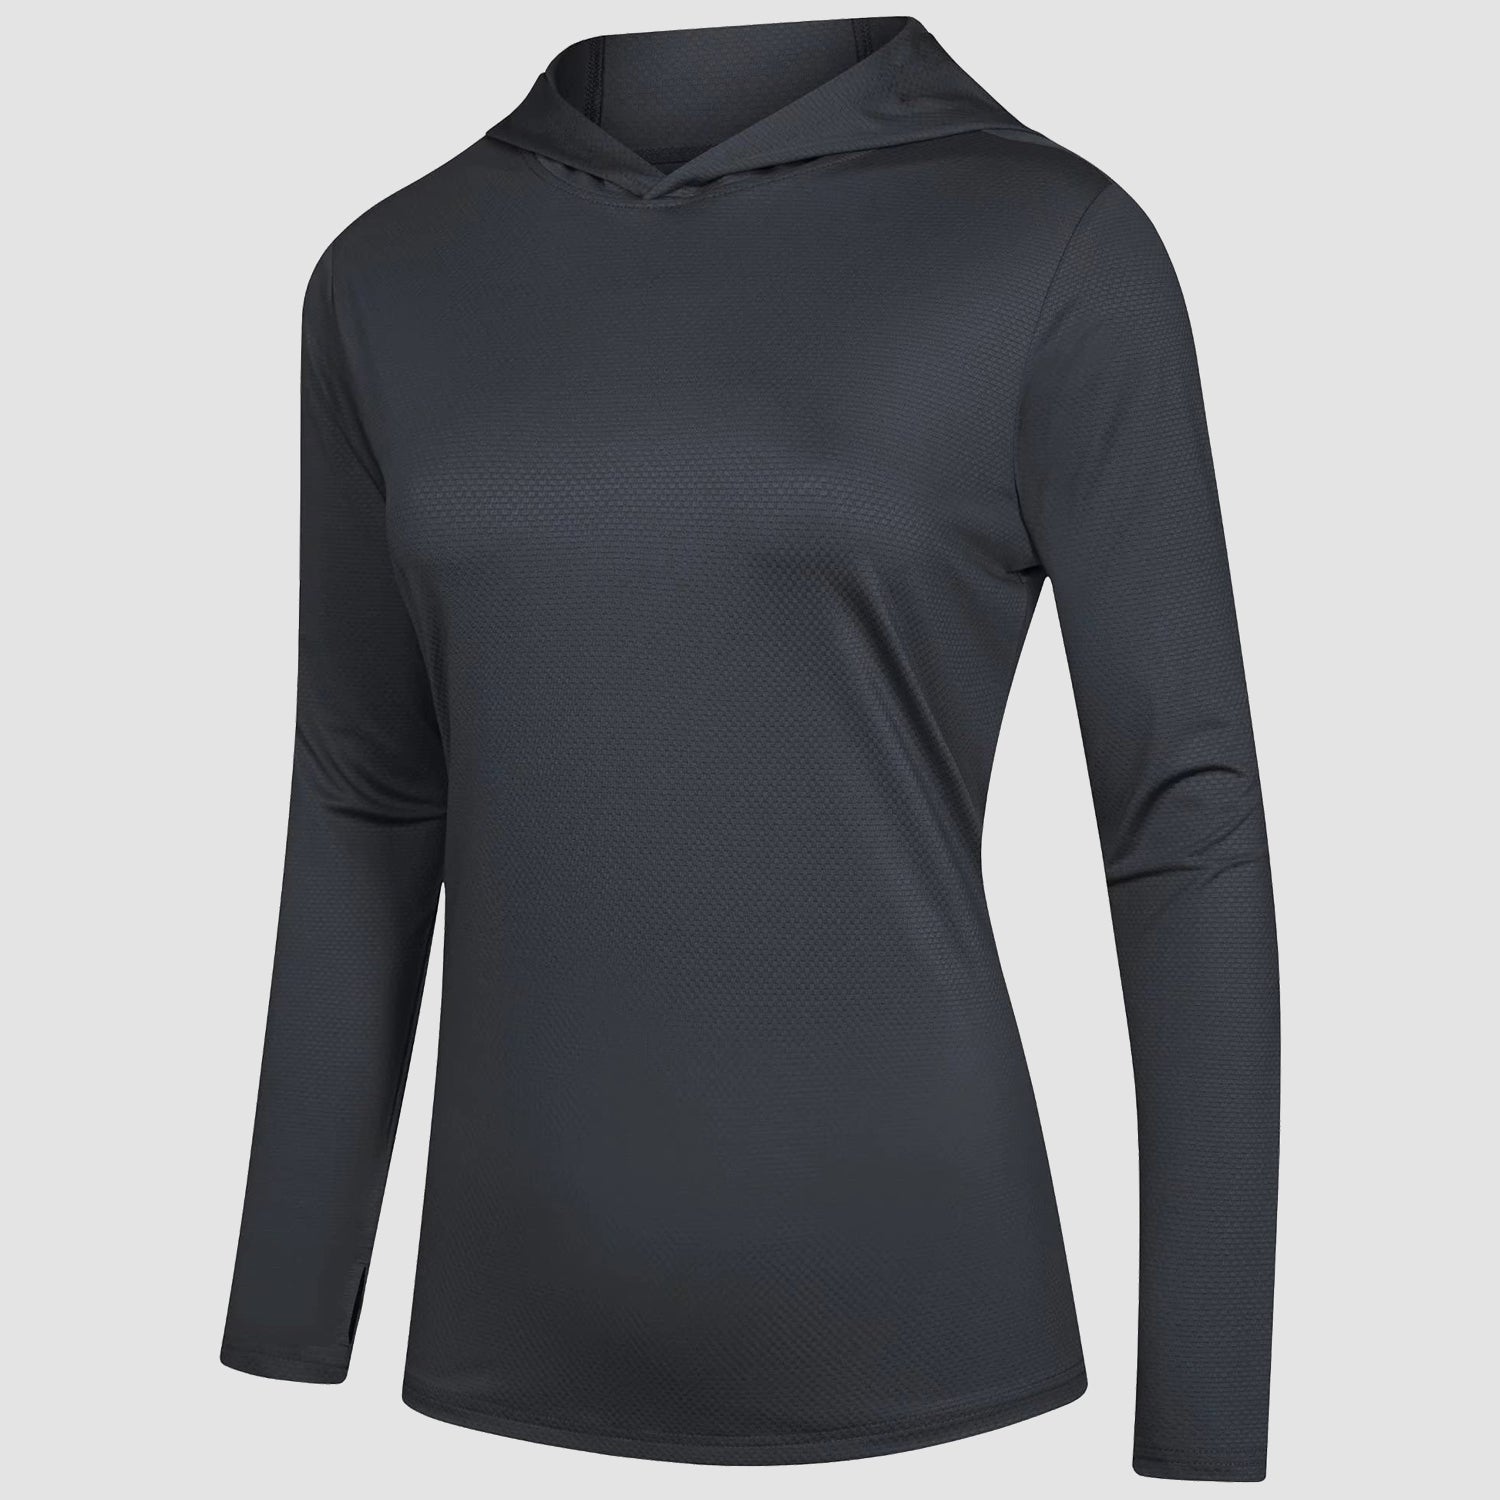 Women's Hoodie Shirts UPF 50+ Sun Protection Long Sleeve UV Shirt Fishing Hiking Athletic Shirts with Thumb Hole, Light Grey / M